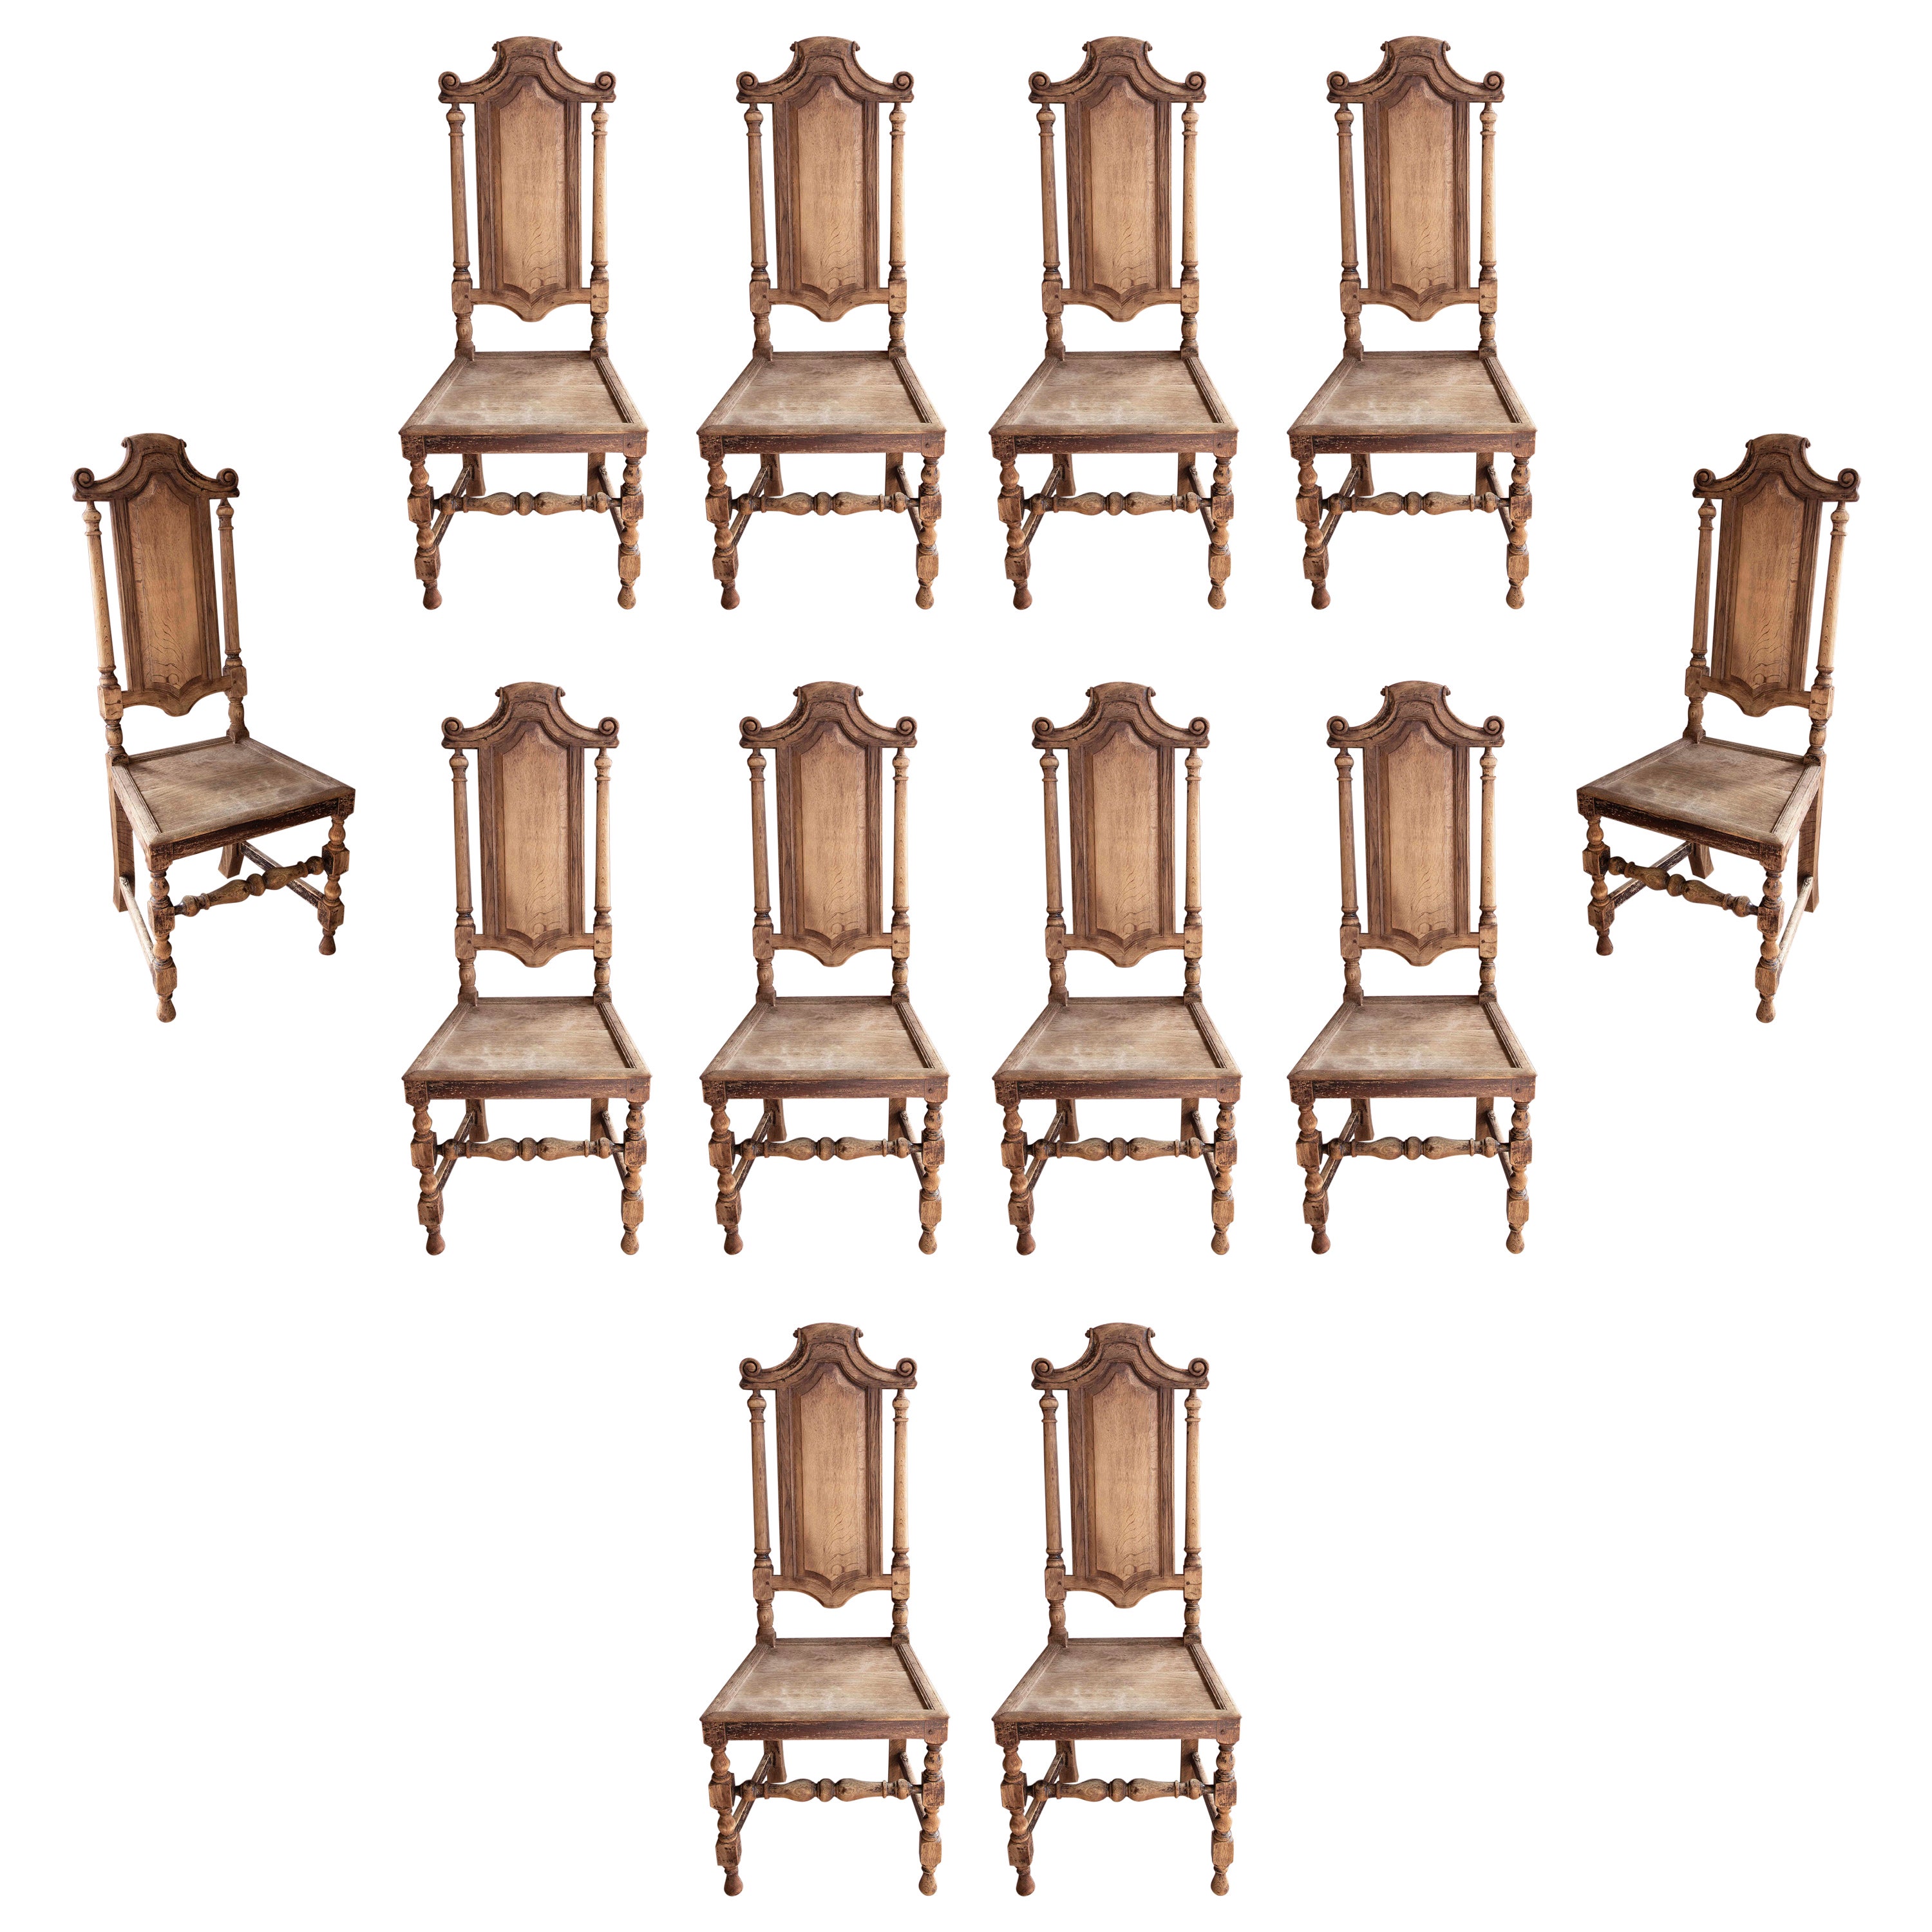 Set of Twelve Elegant Wooden Dining Room Chairs with Backrest